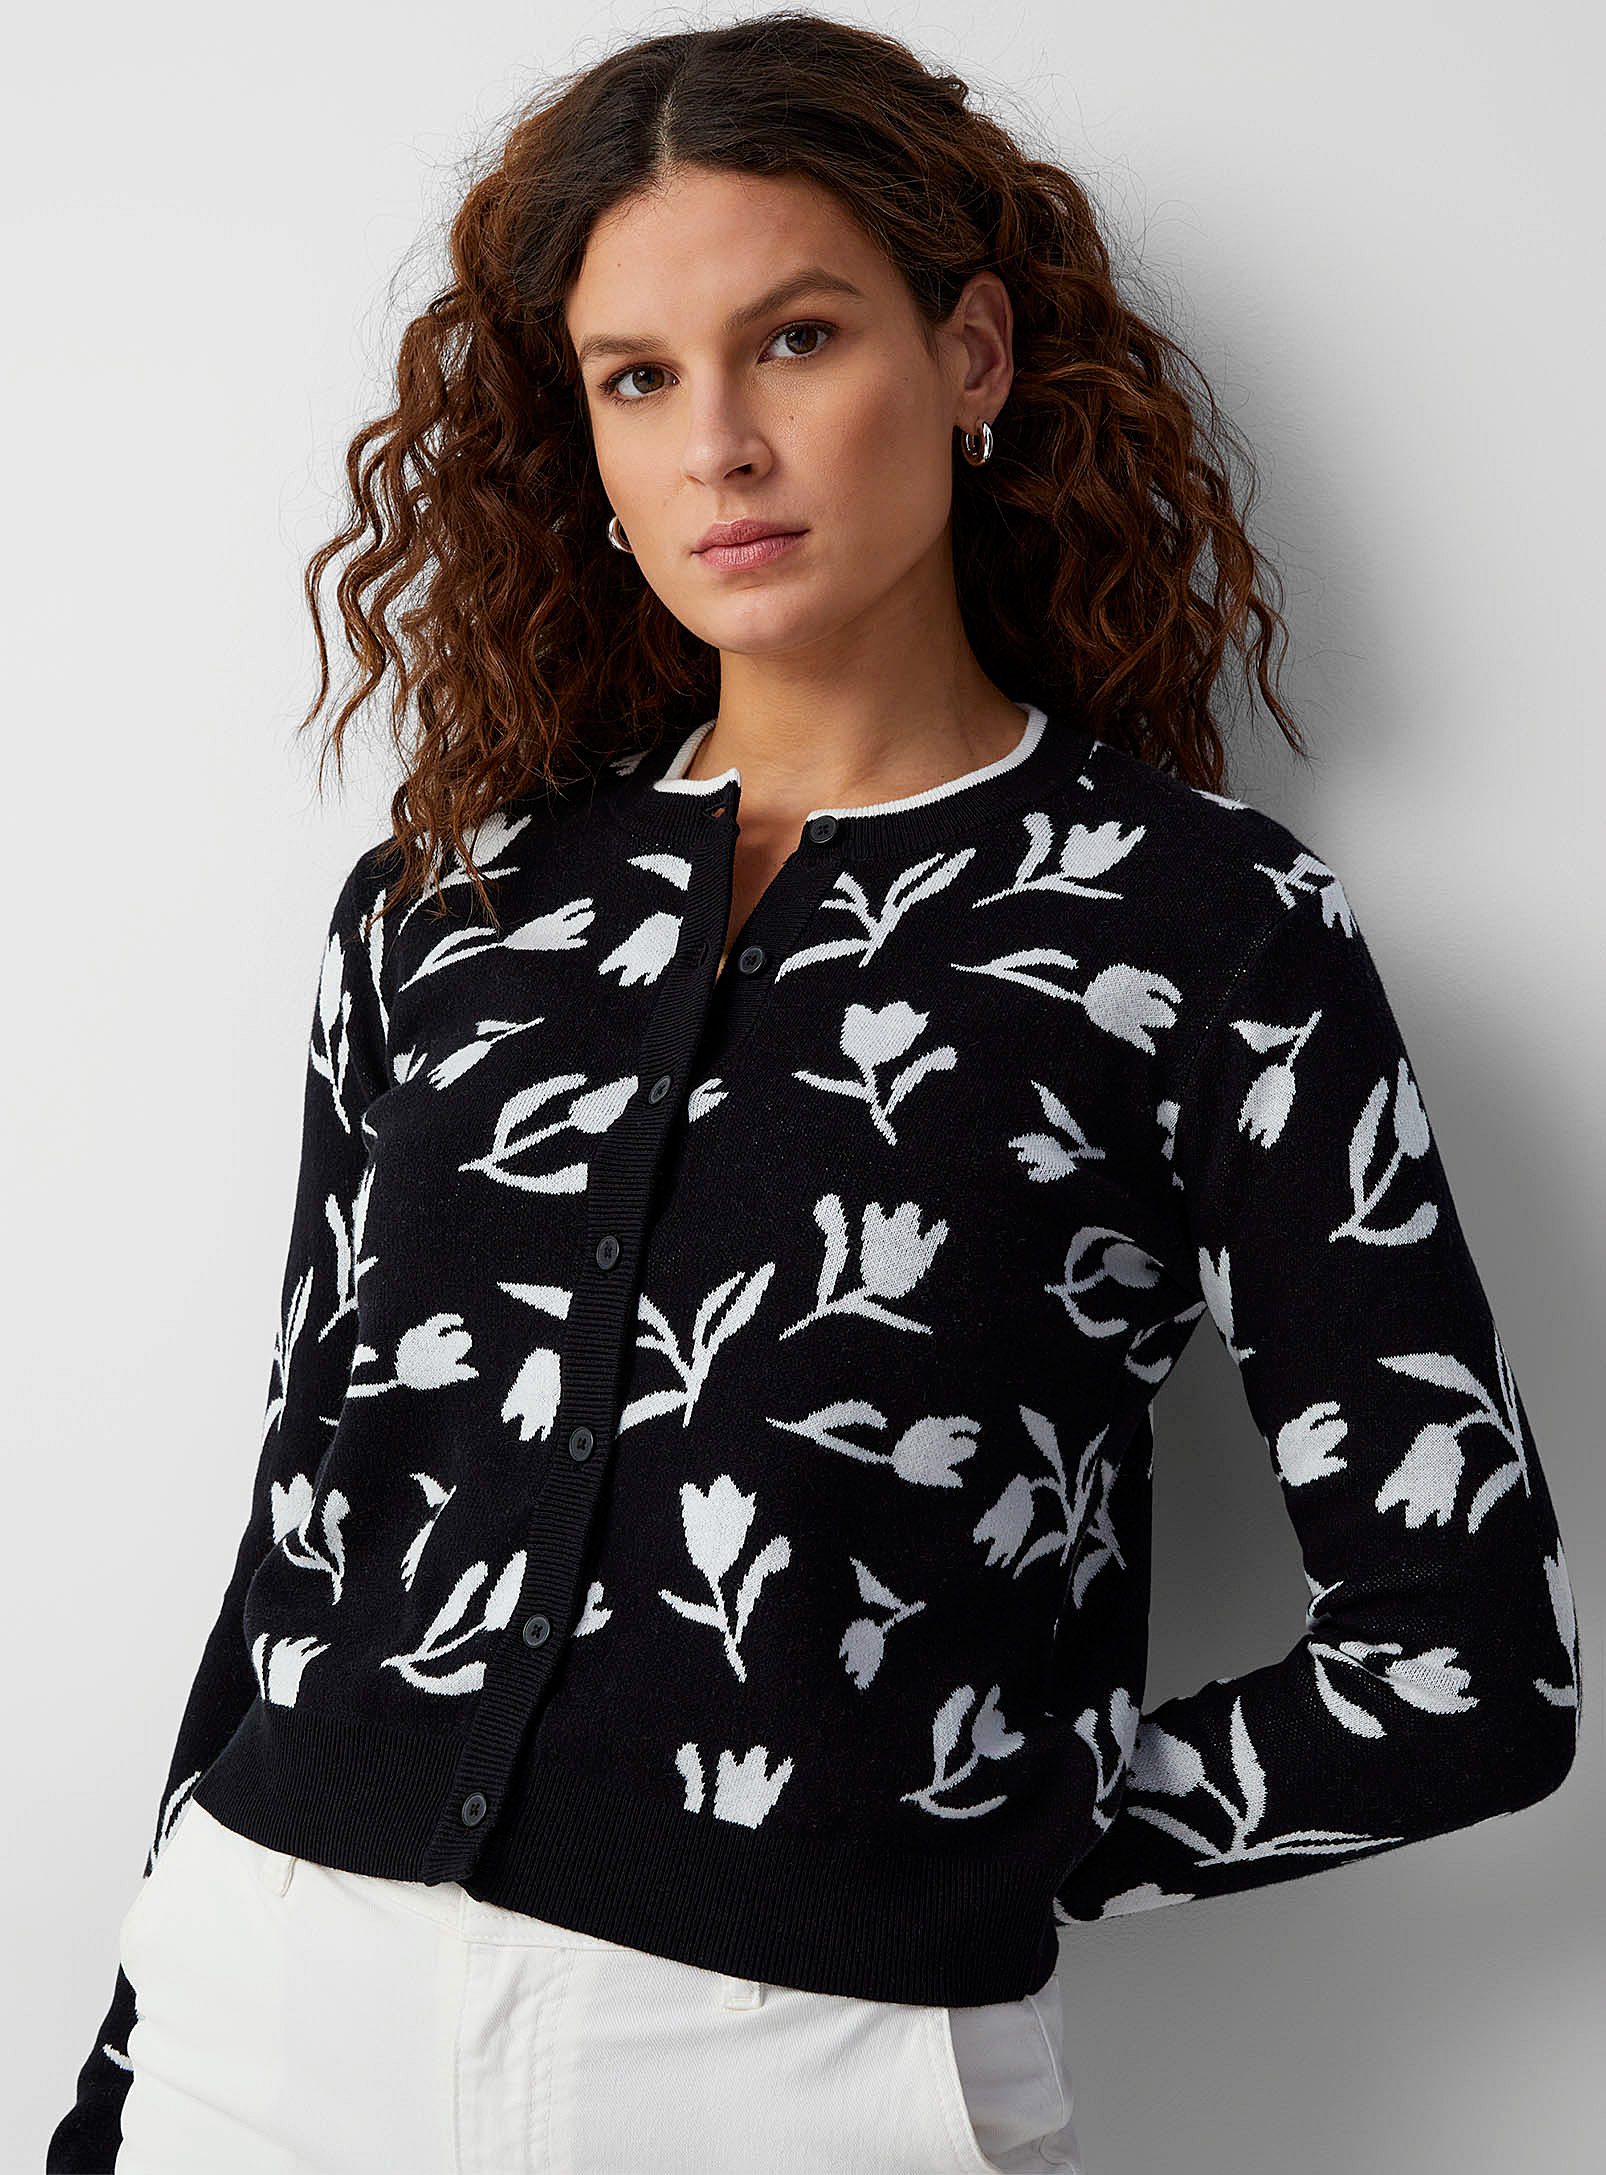 Contemporaine - Women's Tulip jacquard Cardigan Sweater